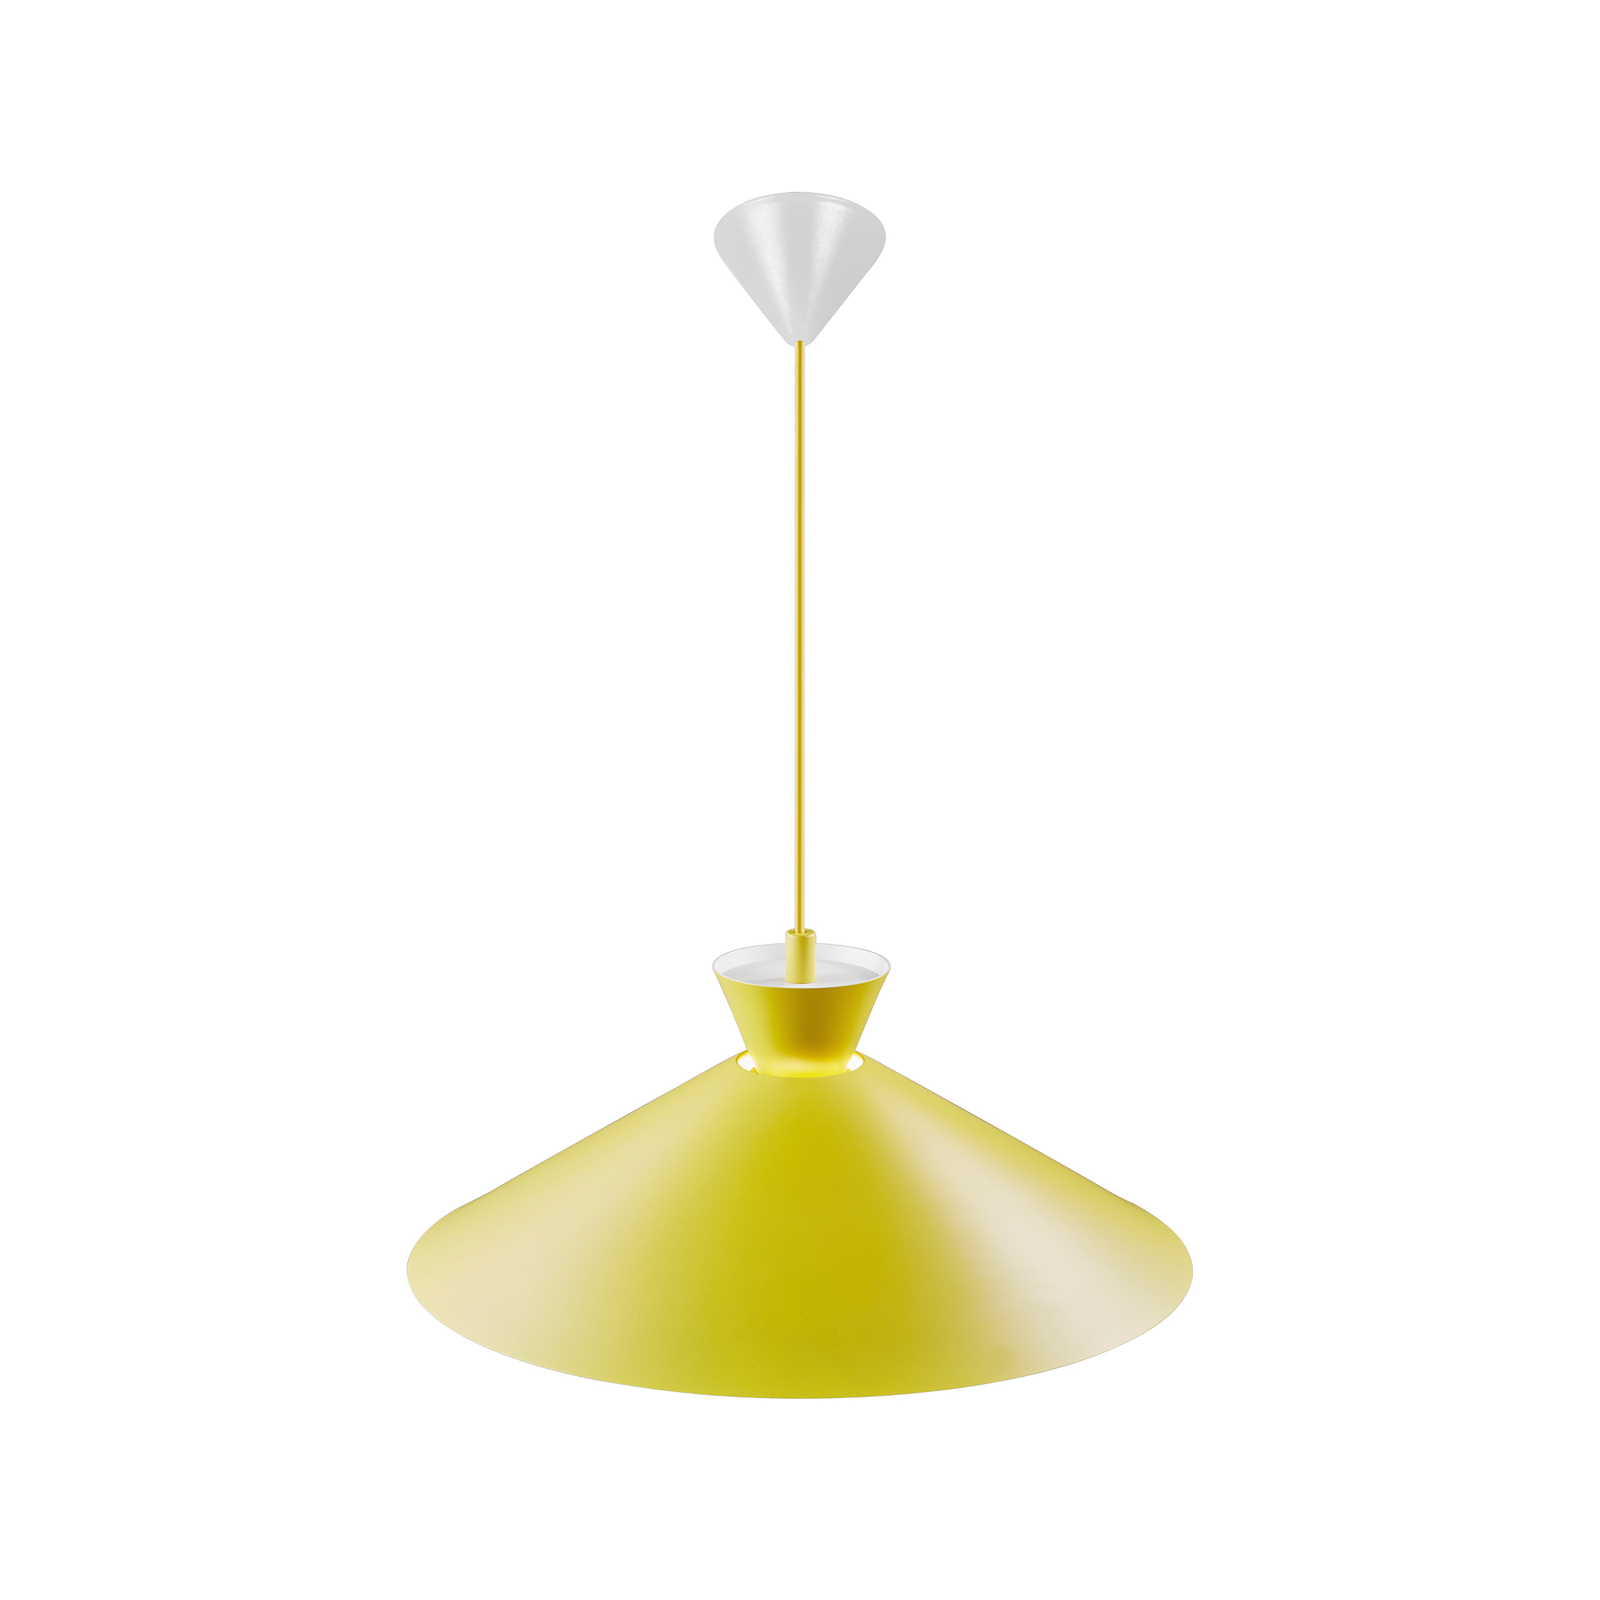 Dial pendant light with metal shade, yellow, Ø 45 cm